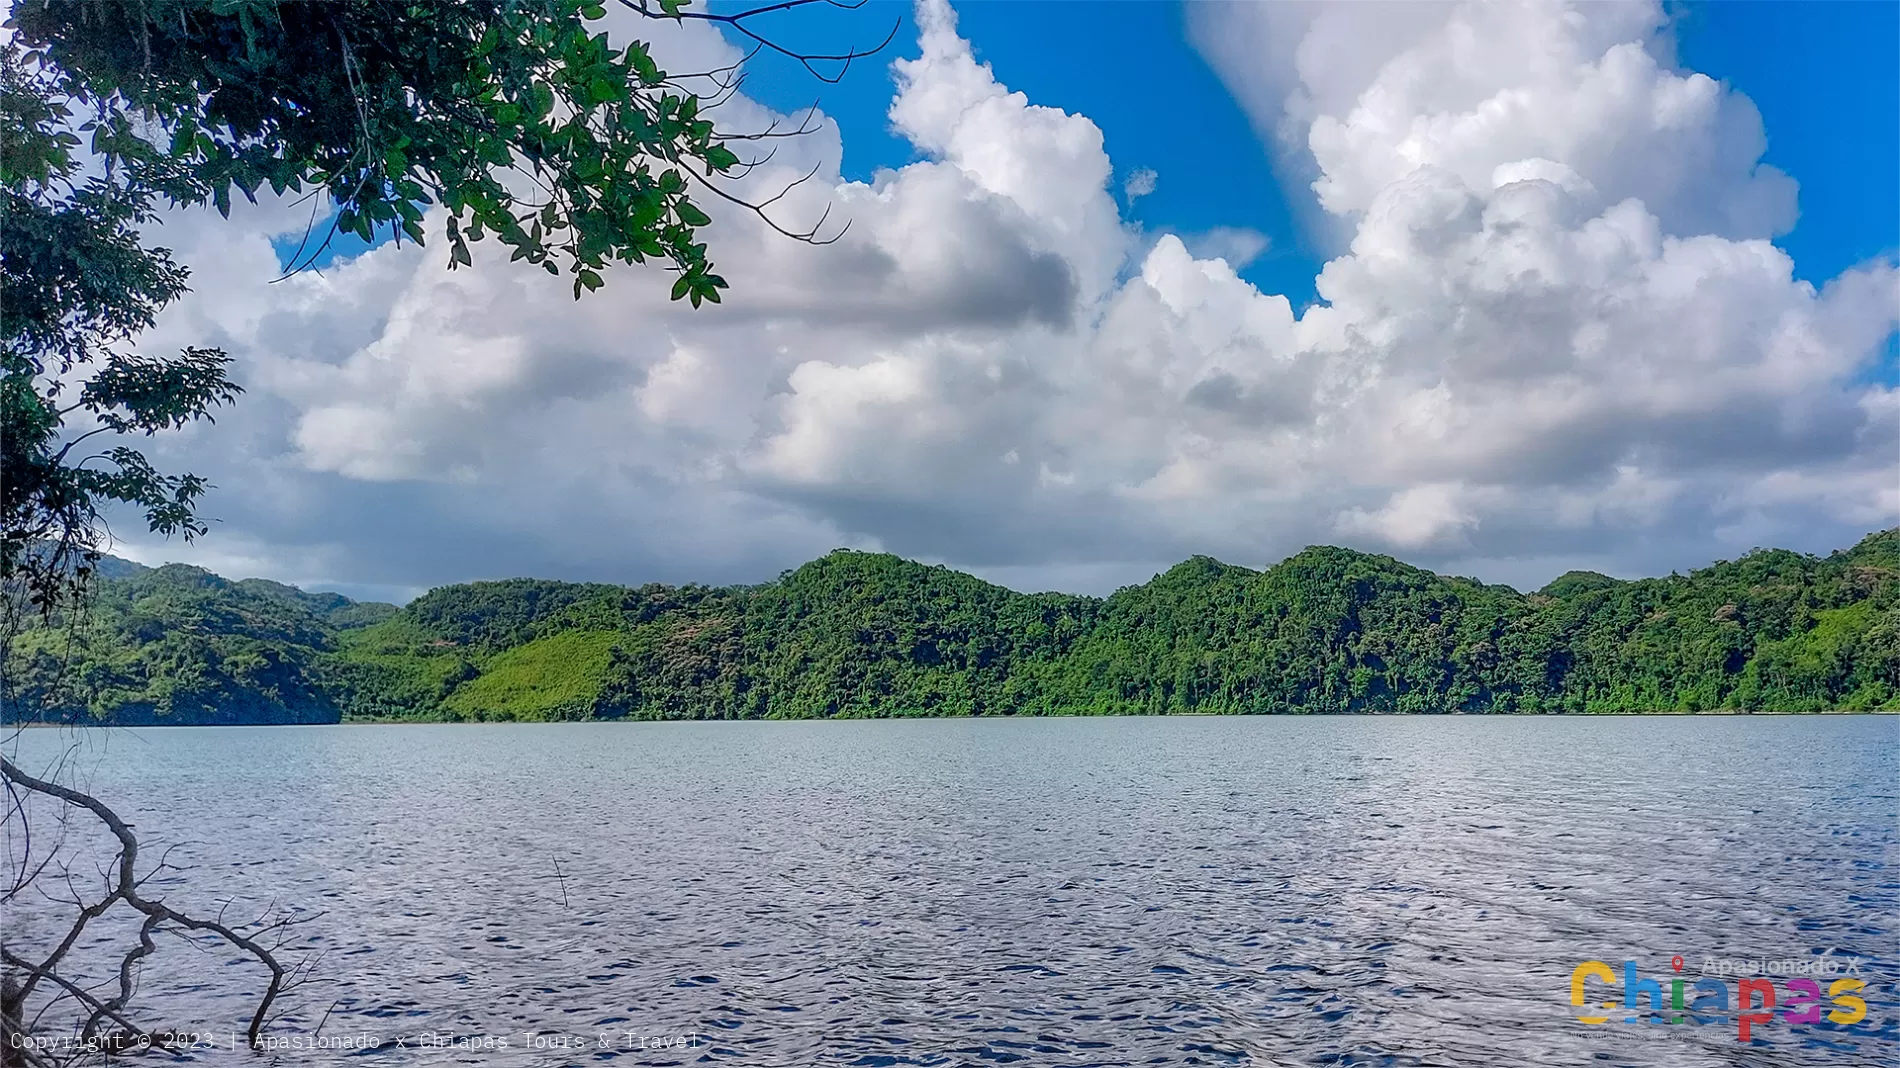 Aventura natural en Chiapas: Laguna Guinea y sus secretos